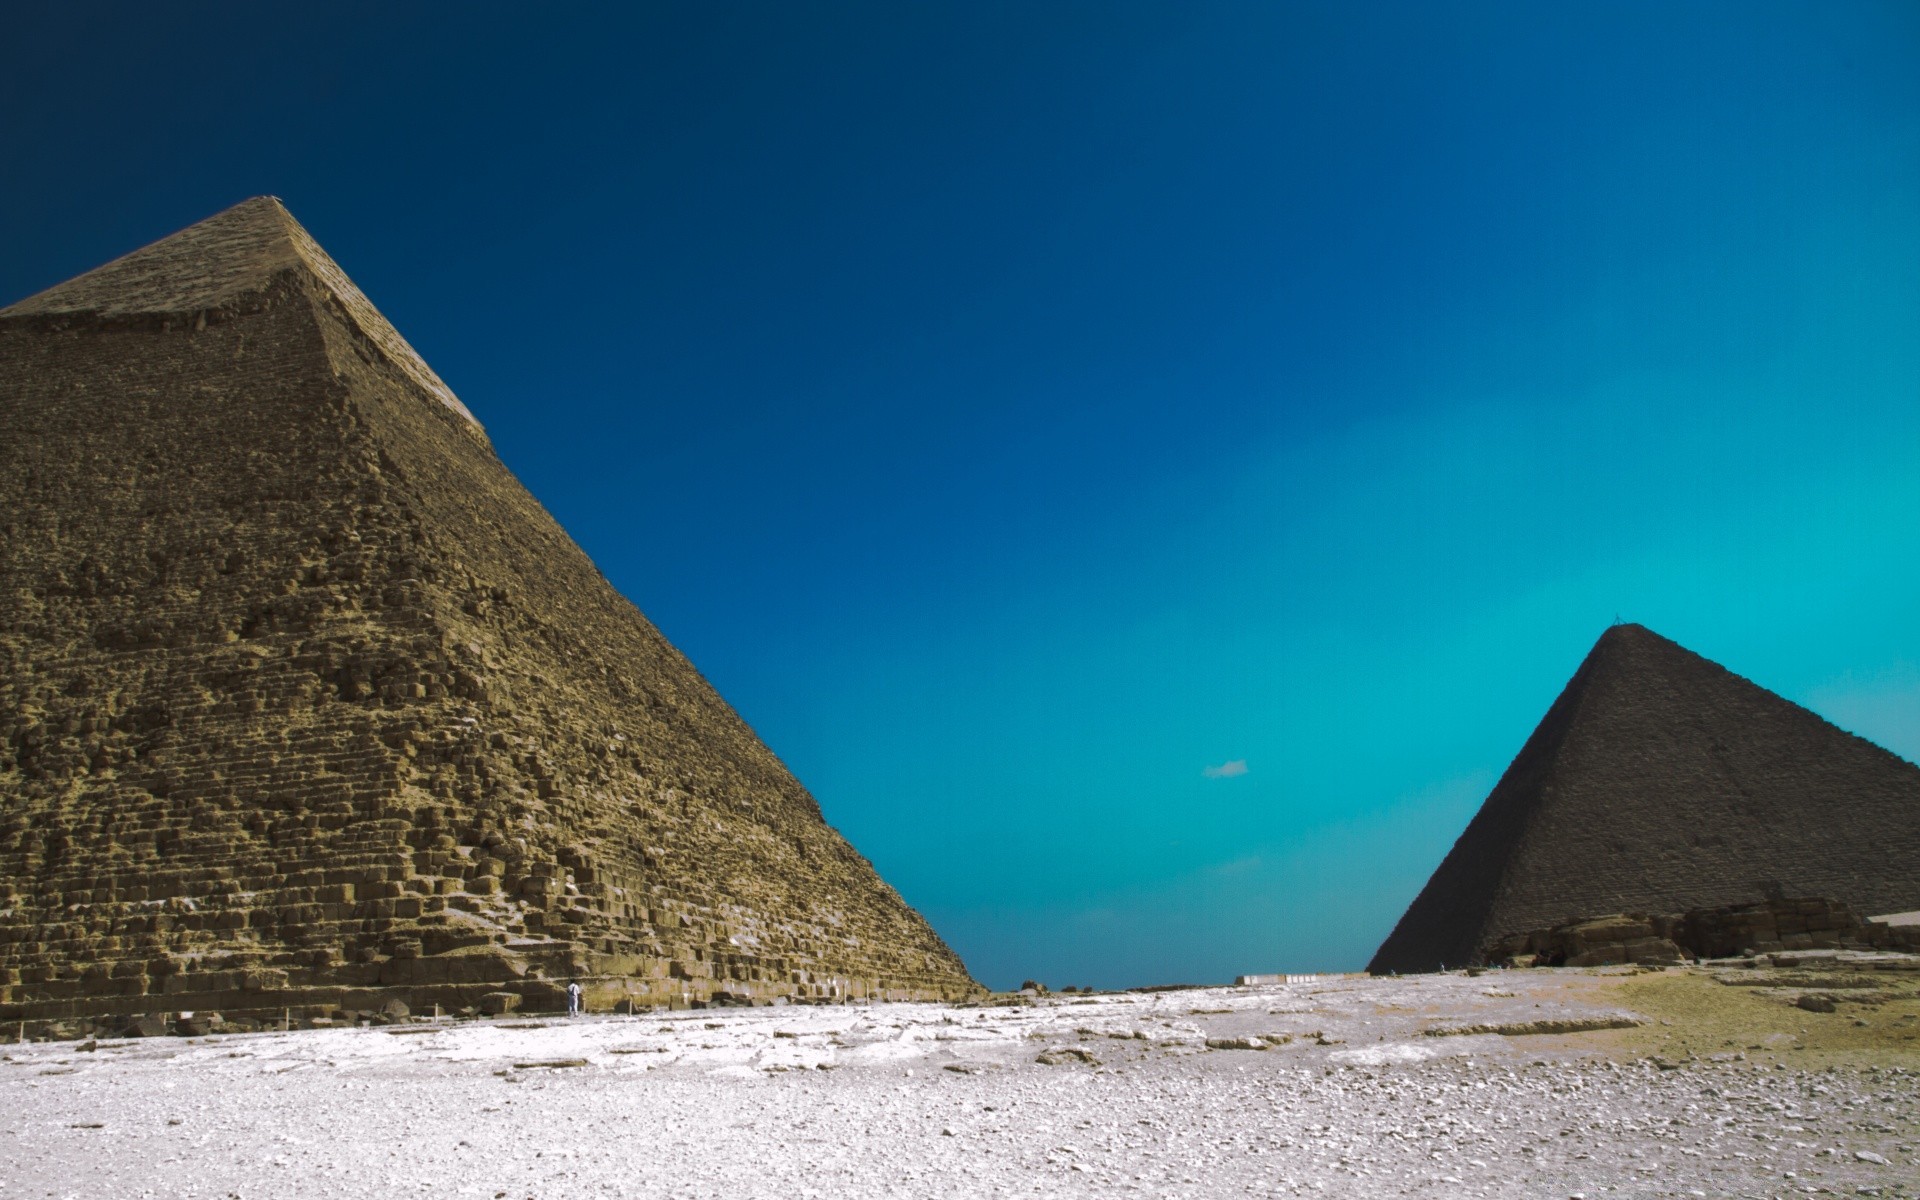 africa pyramid desert travel sand landscape stone outdoors sky grave archaeology daylight pharaoh triangle